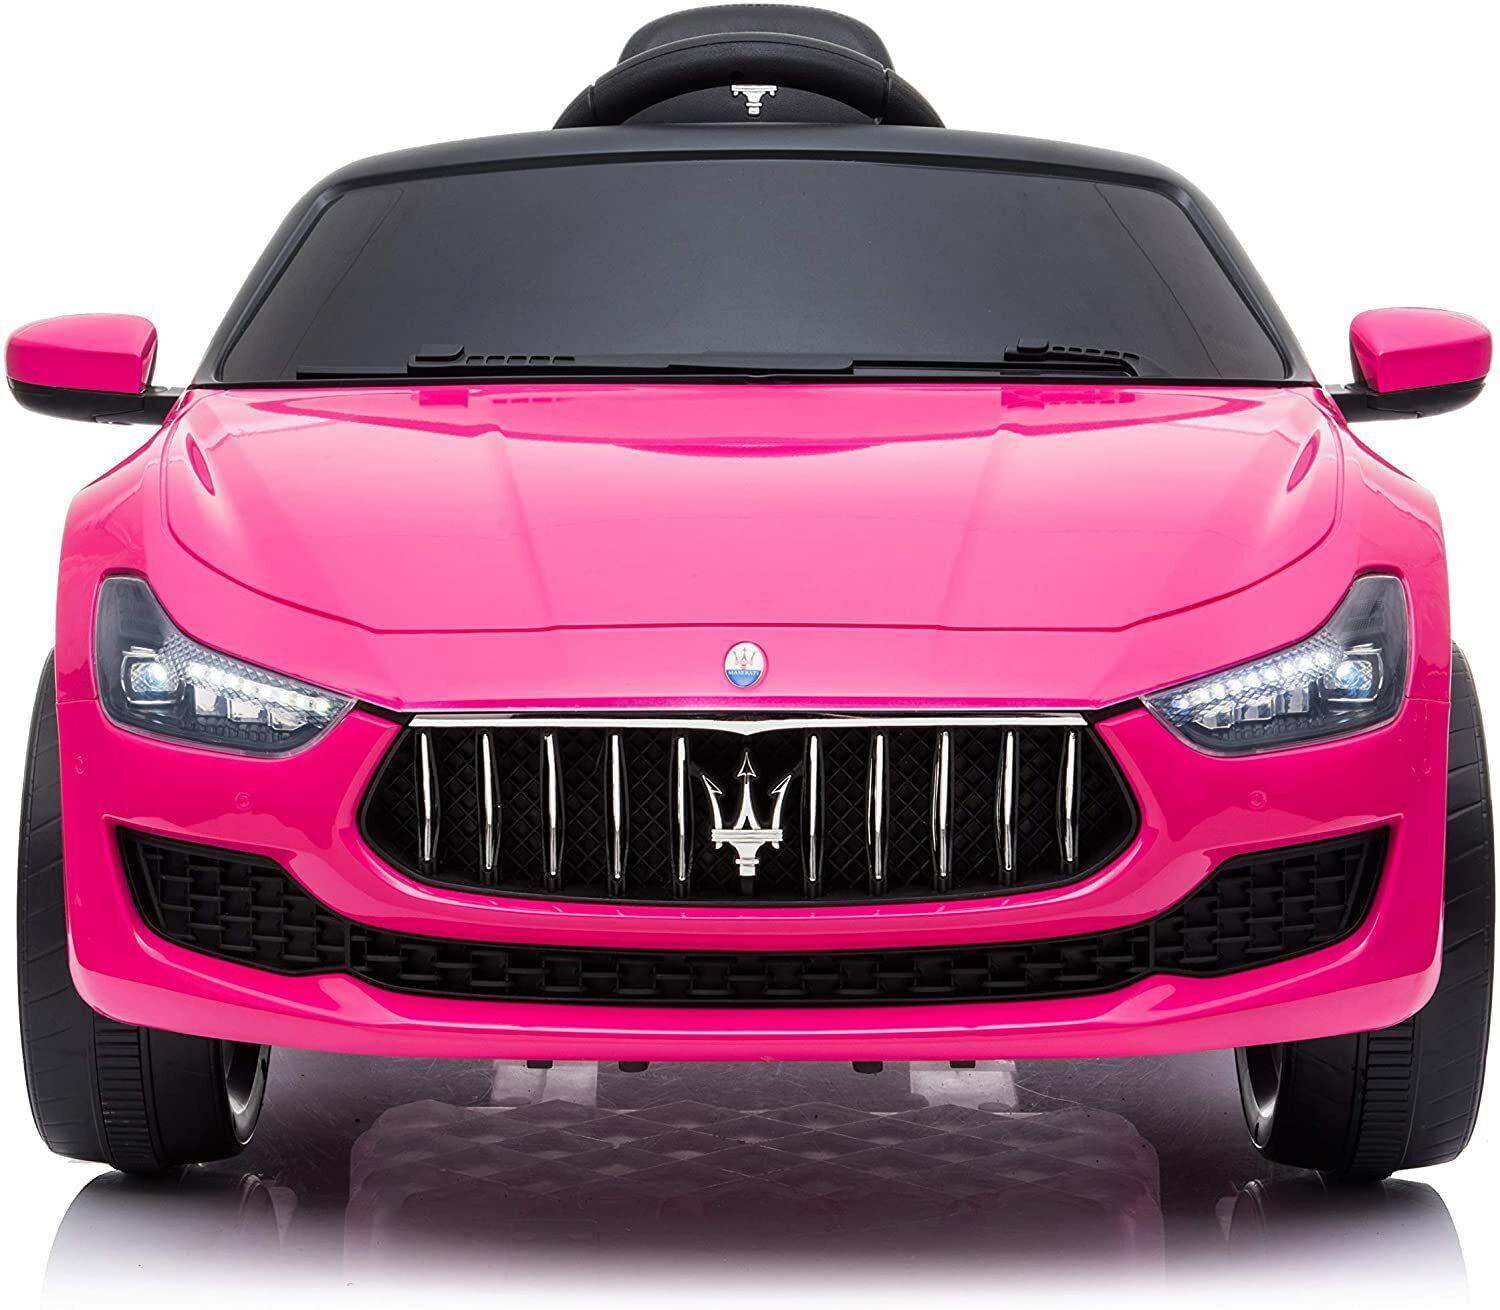 Uenjoy Maserati GranCabrio 12V Electric Kids Ride On Car - Toytexx